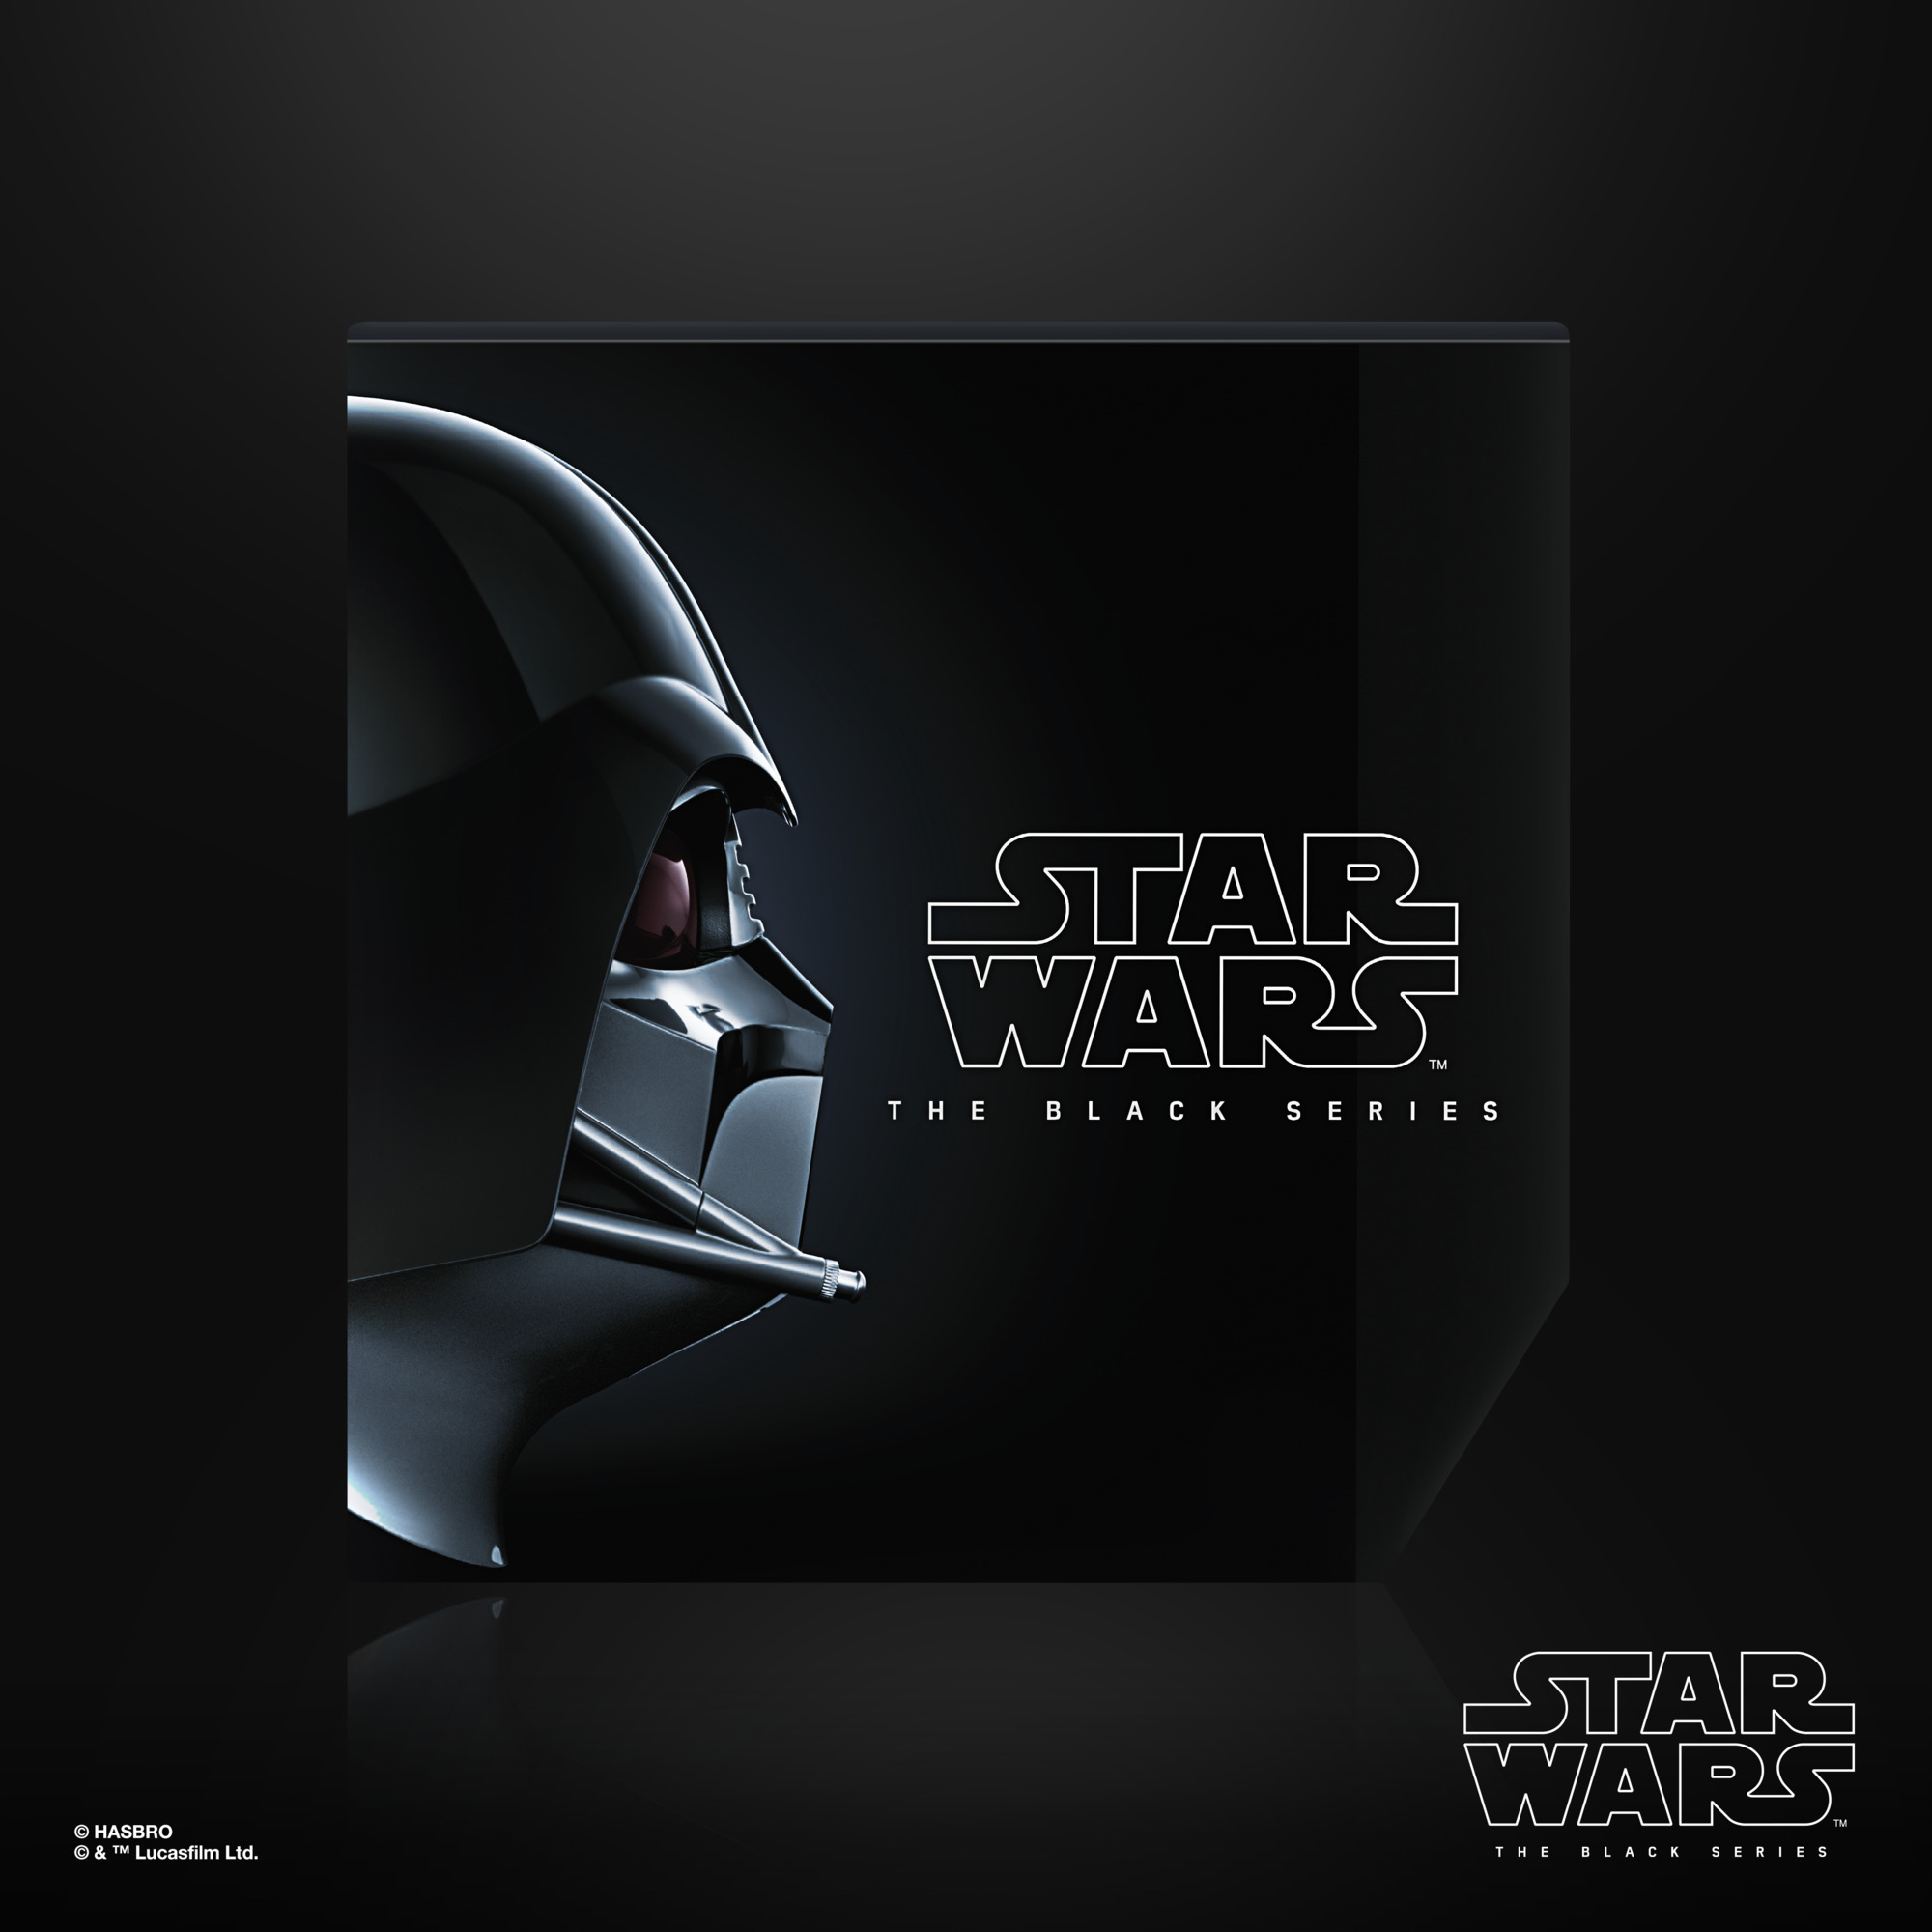 Star Wars The Black Series Darth Vader Helm F5514EU40 5010994187637